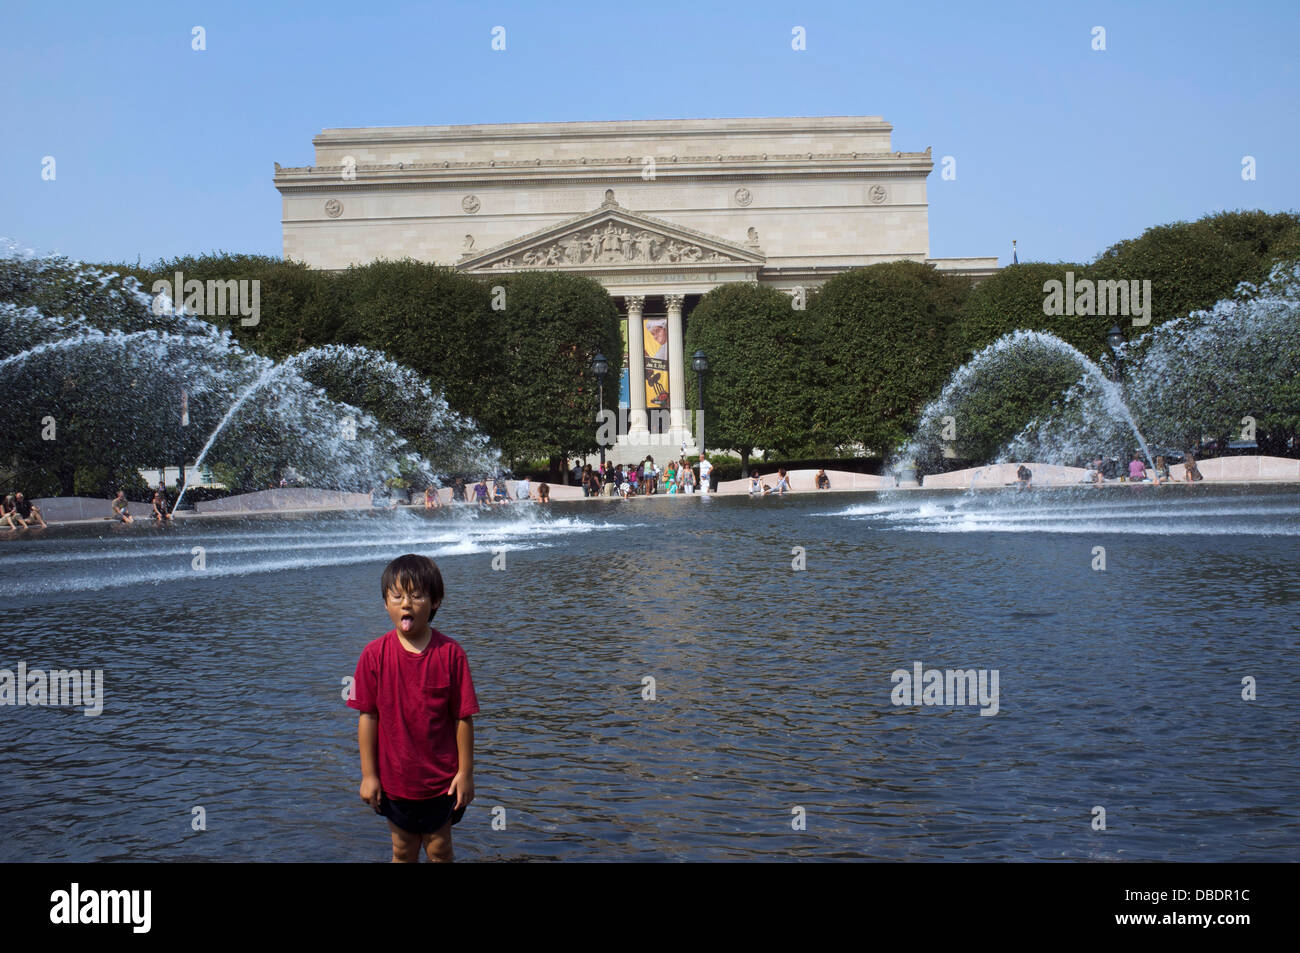 Fountain in the sculpture garden of the National Gallery, Washington, DC. Stock Photo